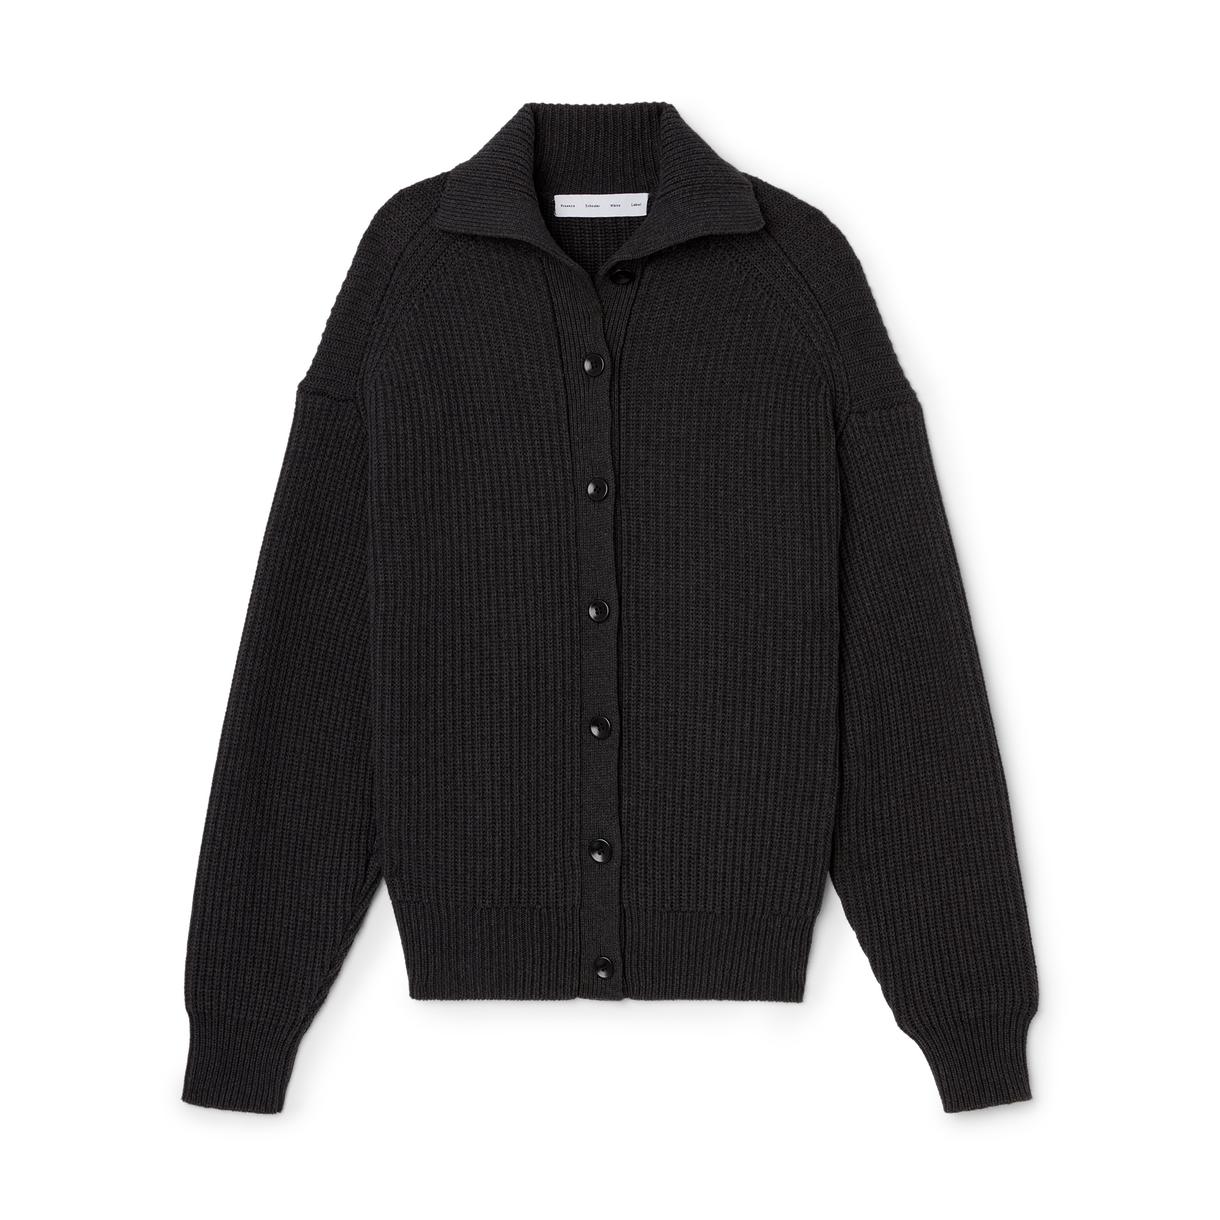 Proenza Schouler White Label Cotton-Cashmere Turtleneck Sweater